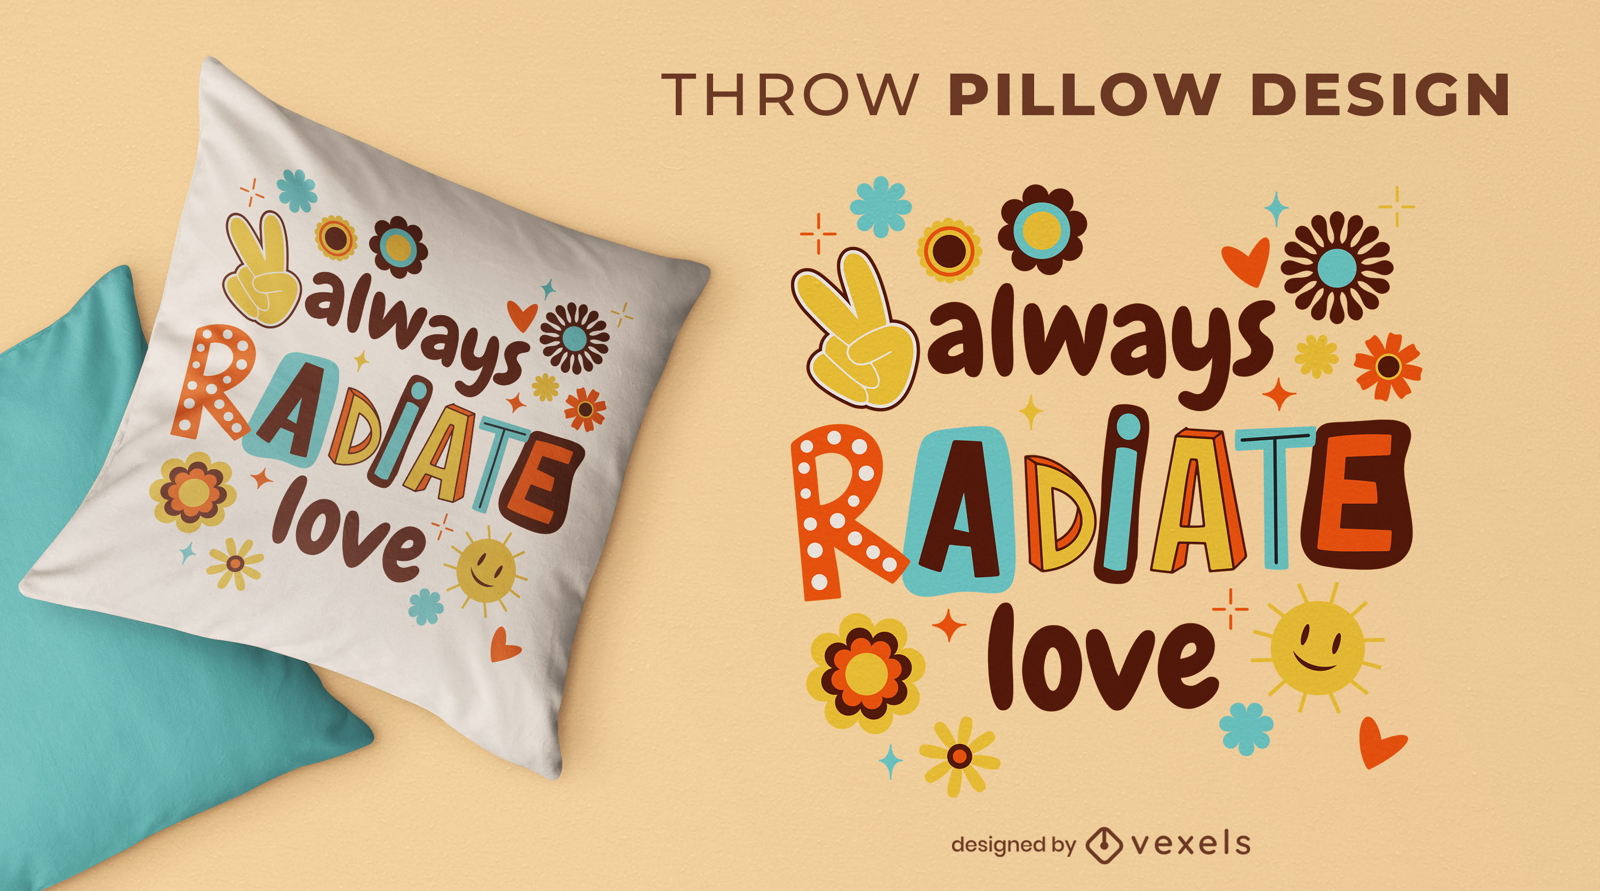 Vintage love quote throw pillow design